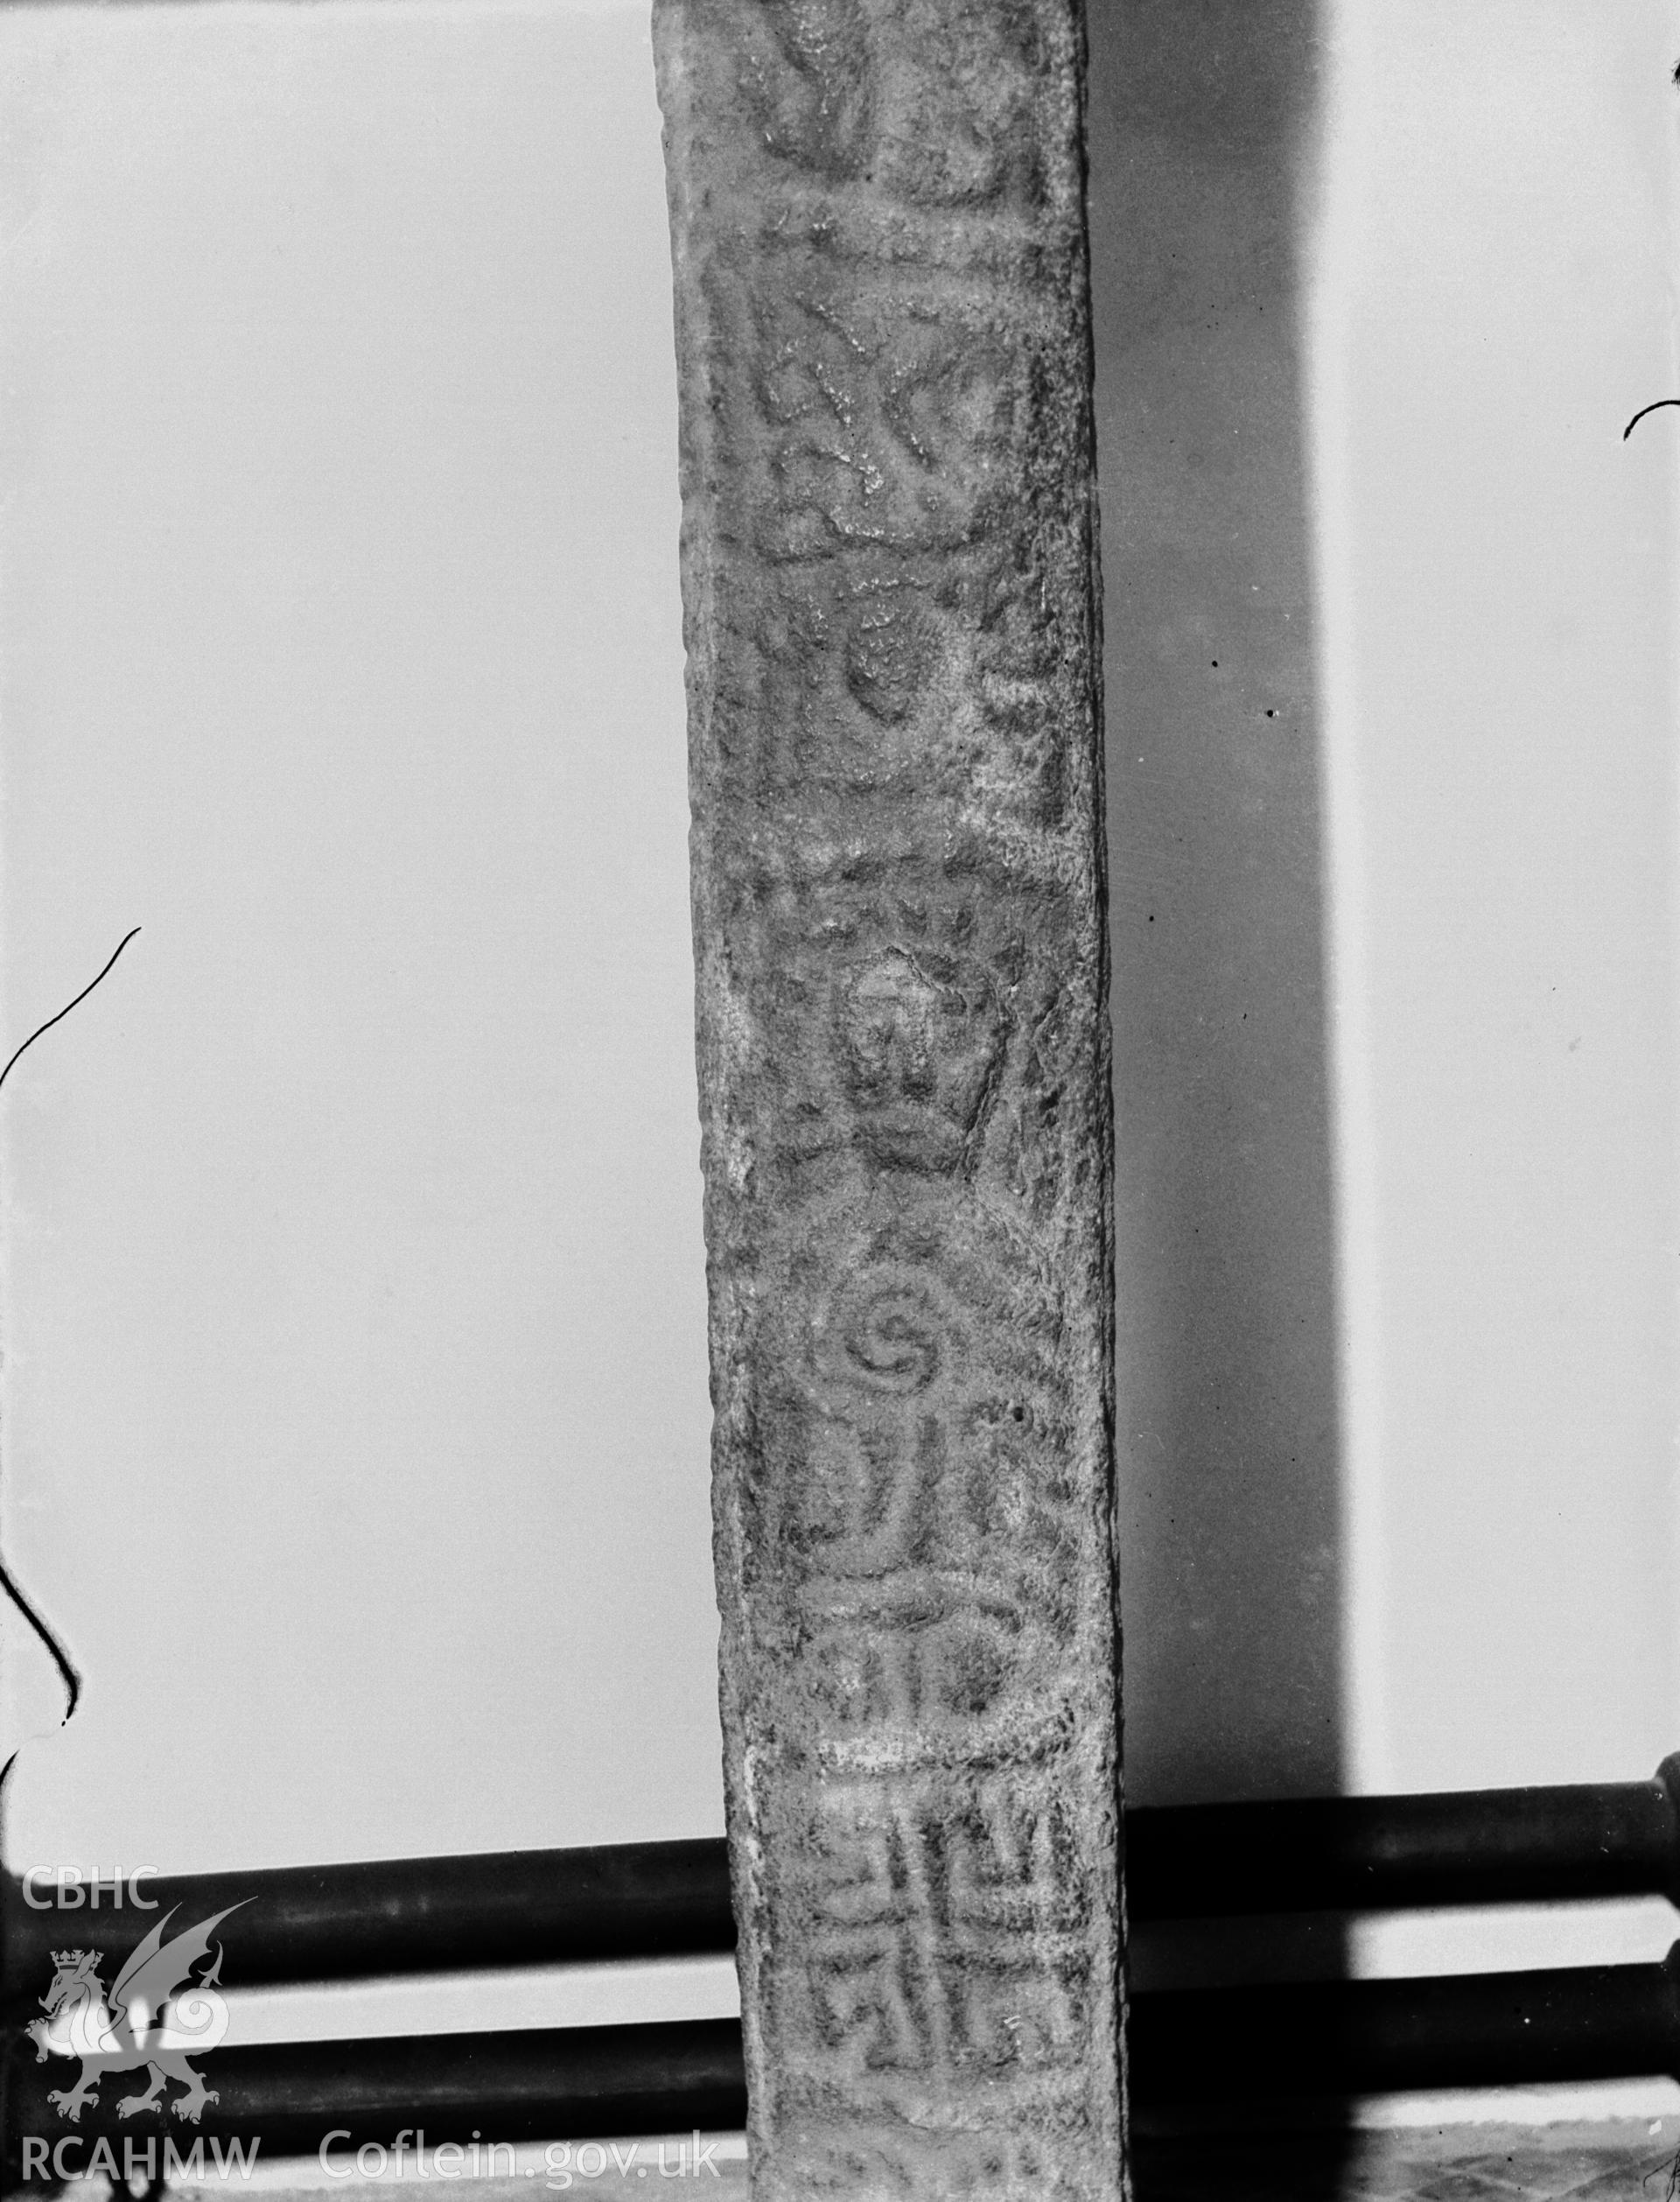 Black and white photo showing inscribed stone at Llanbadarn Fawr Church.